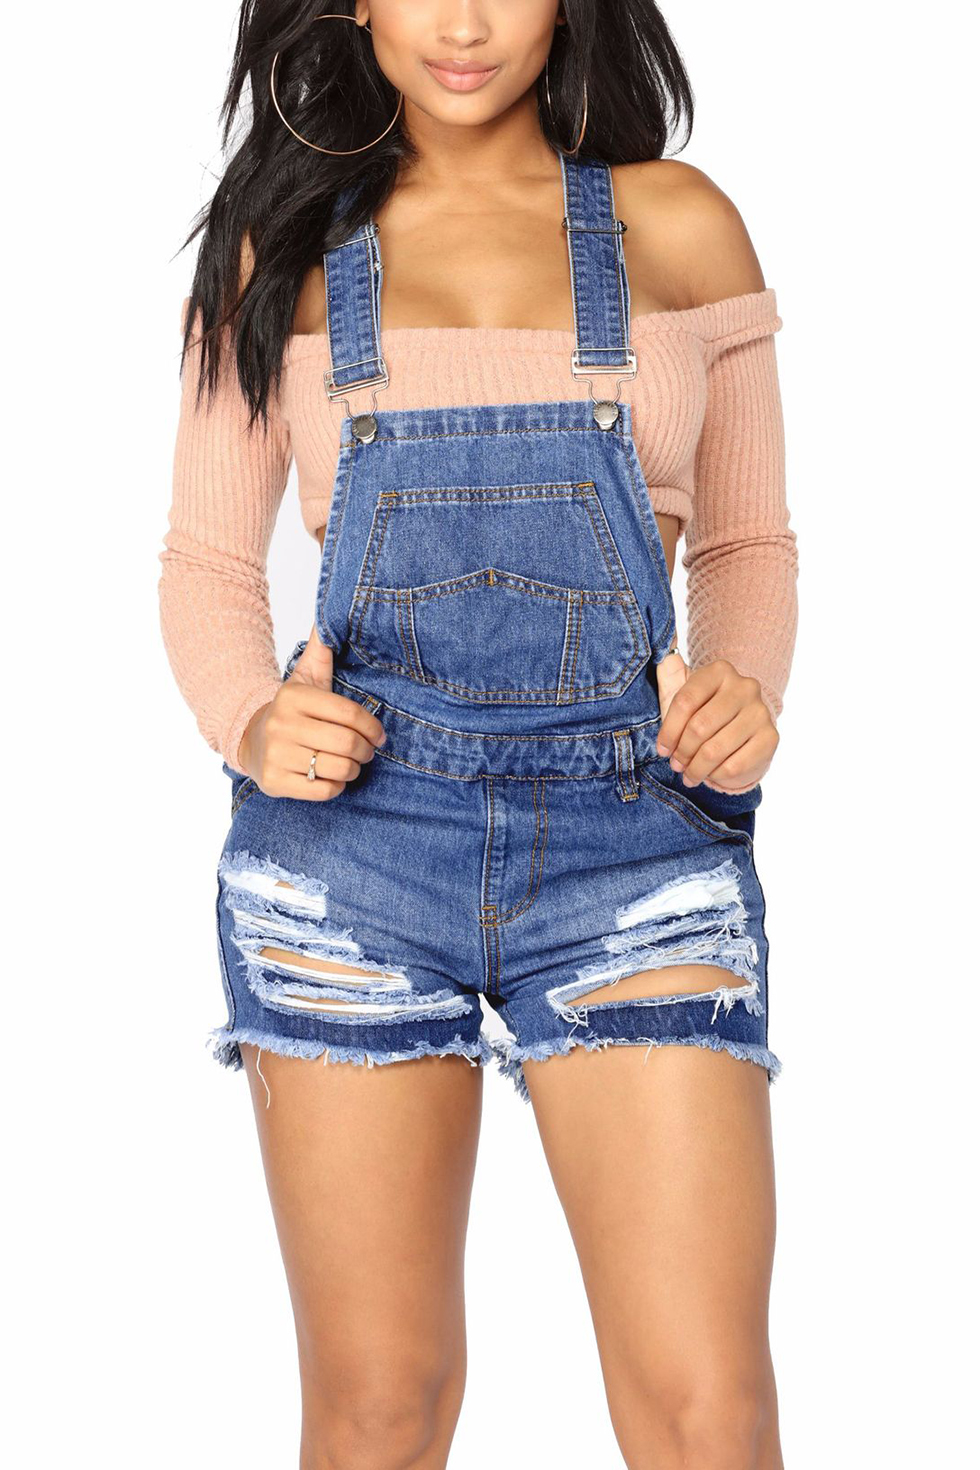 womens blue jean short overalls